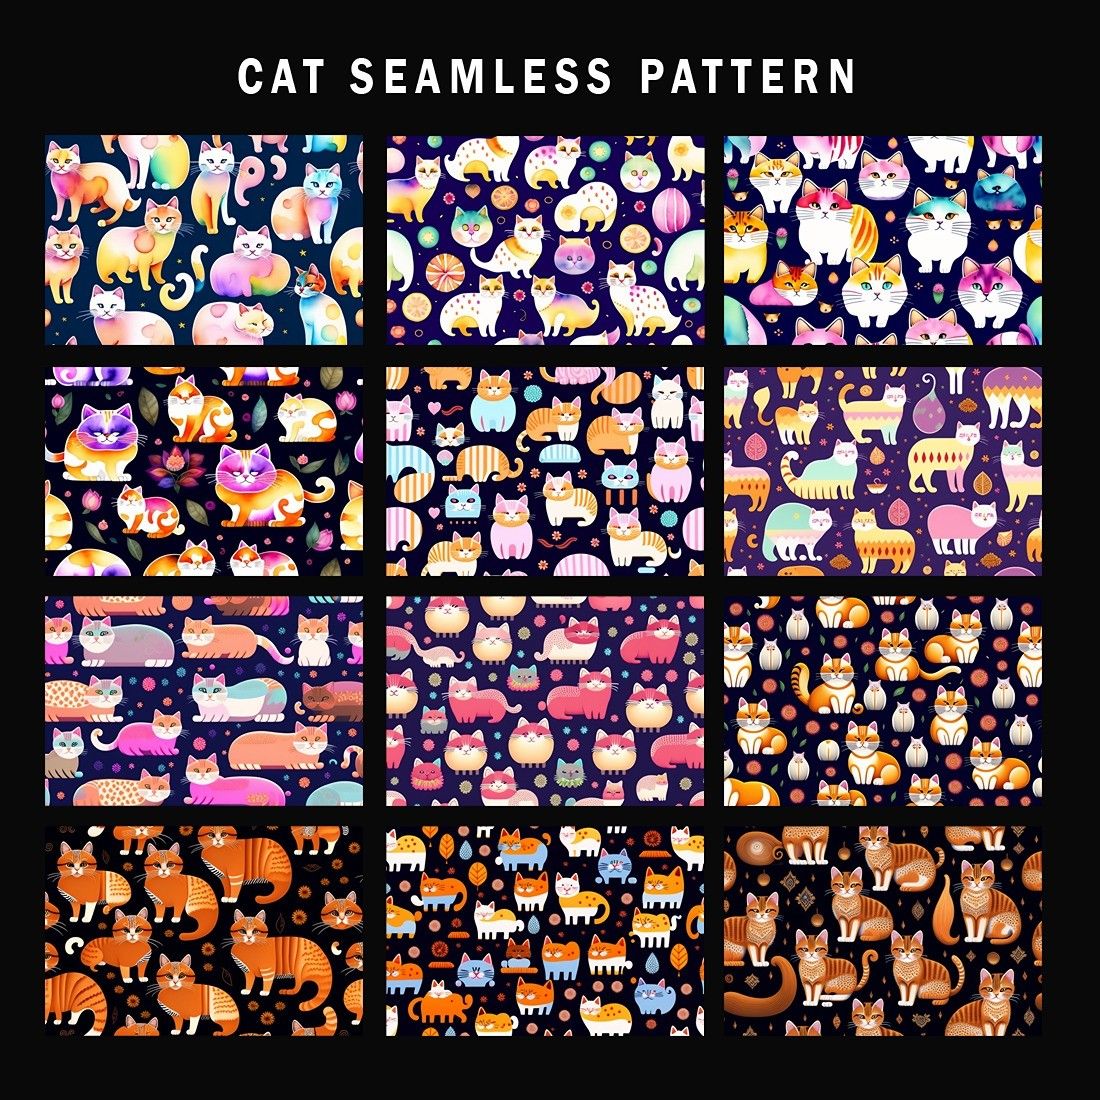 Cate - Seamless pattern, cat background pattern, cat colorful background pattern preview image.